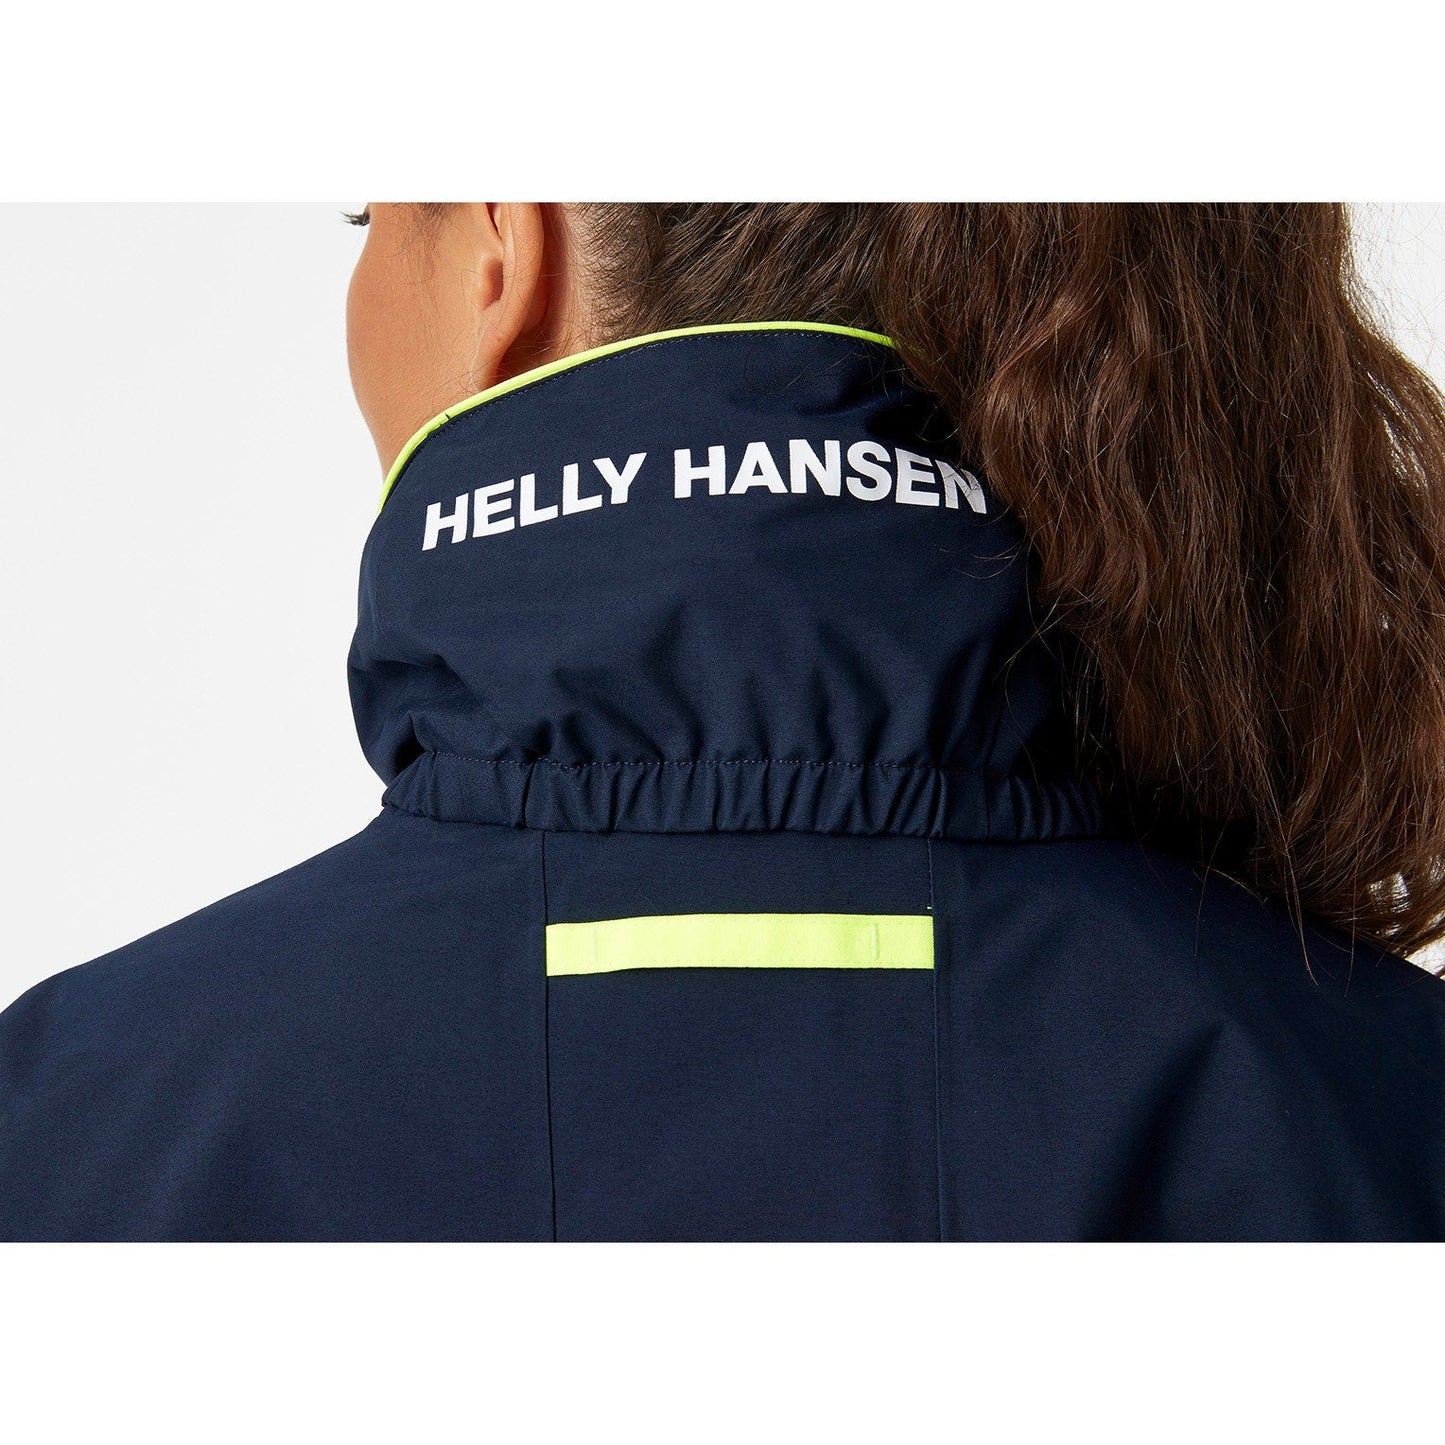 Helly Hansen Women's Salt Inshore Jacket White